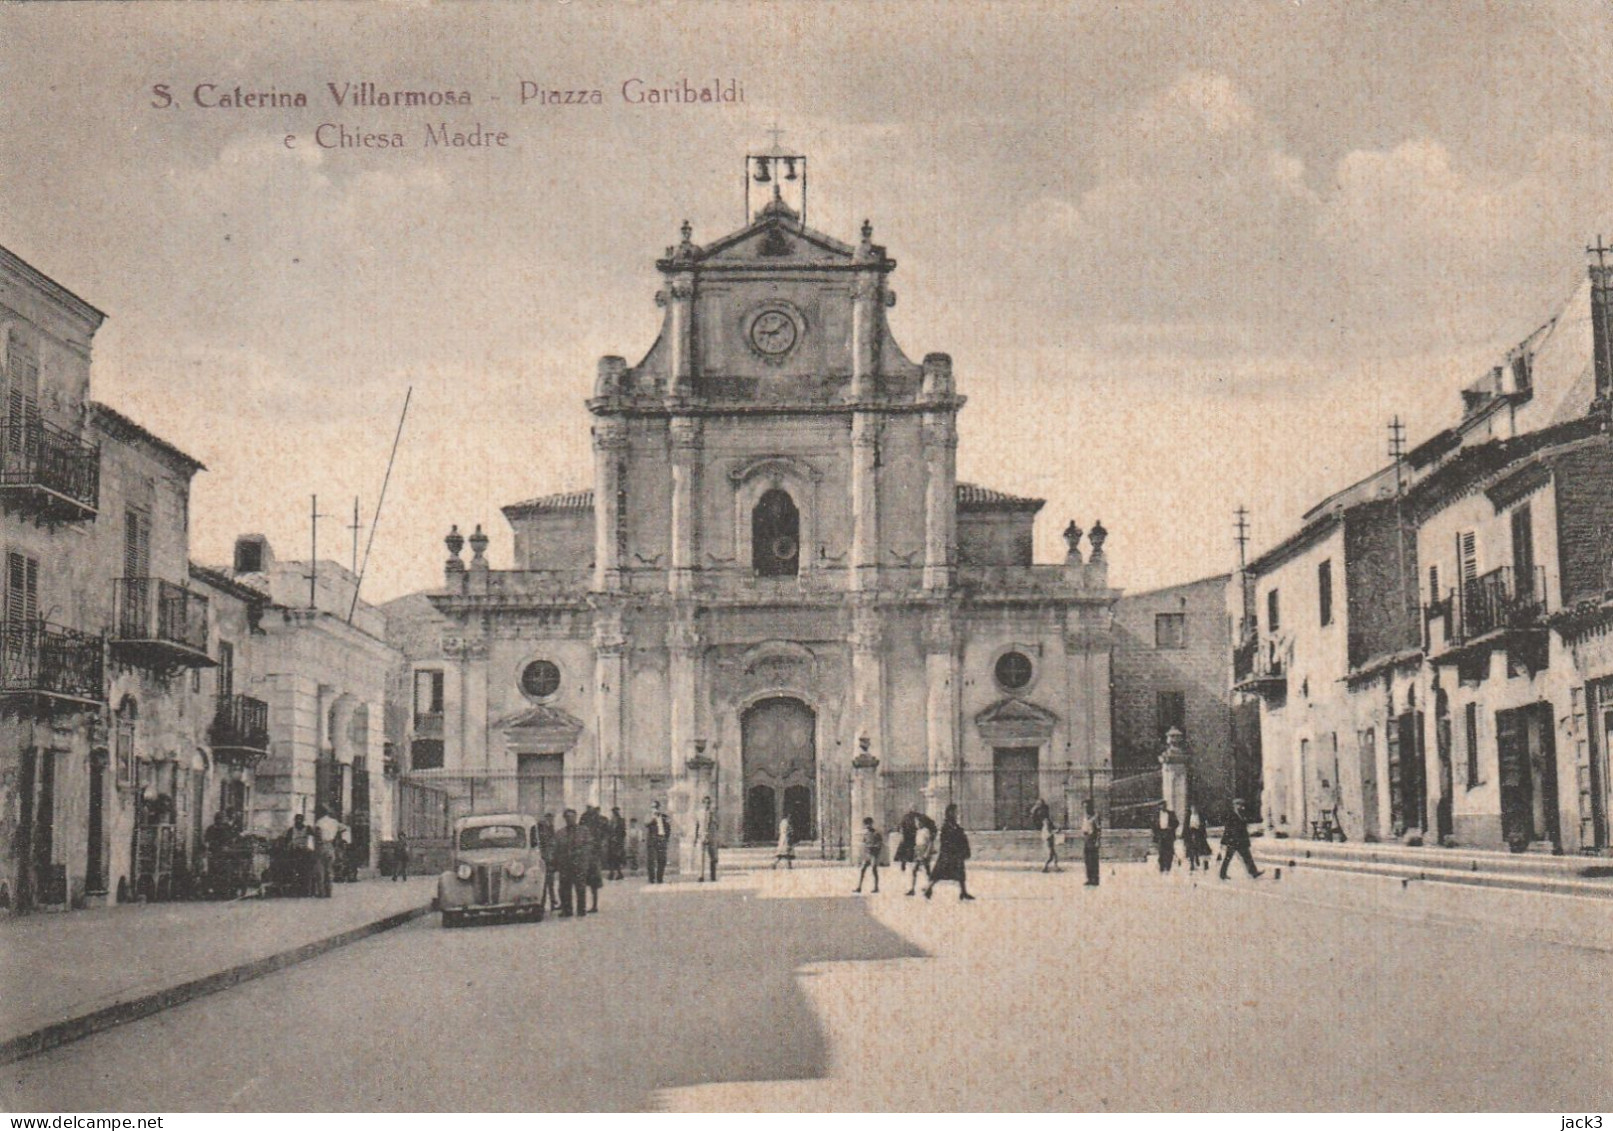 CARTOLINA - SANTA CATERINA VILLARMOSA (CALTANISSETTA) PIAZZA GARIBALDI - Caltanissetta